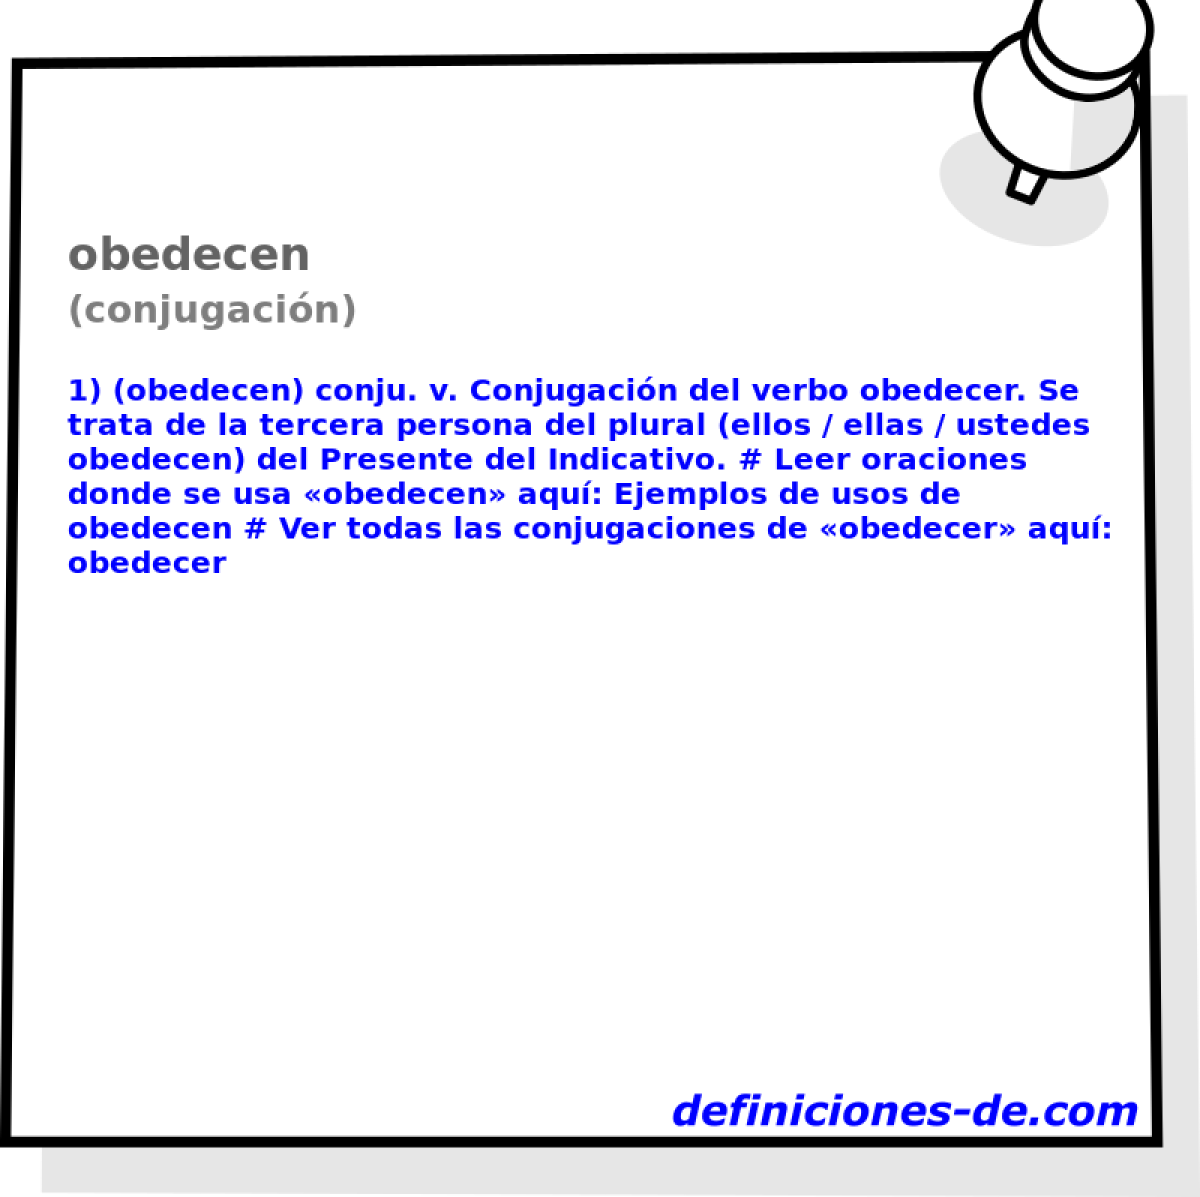 obedecen (conjugacin)